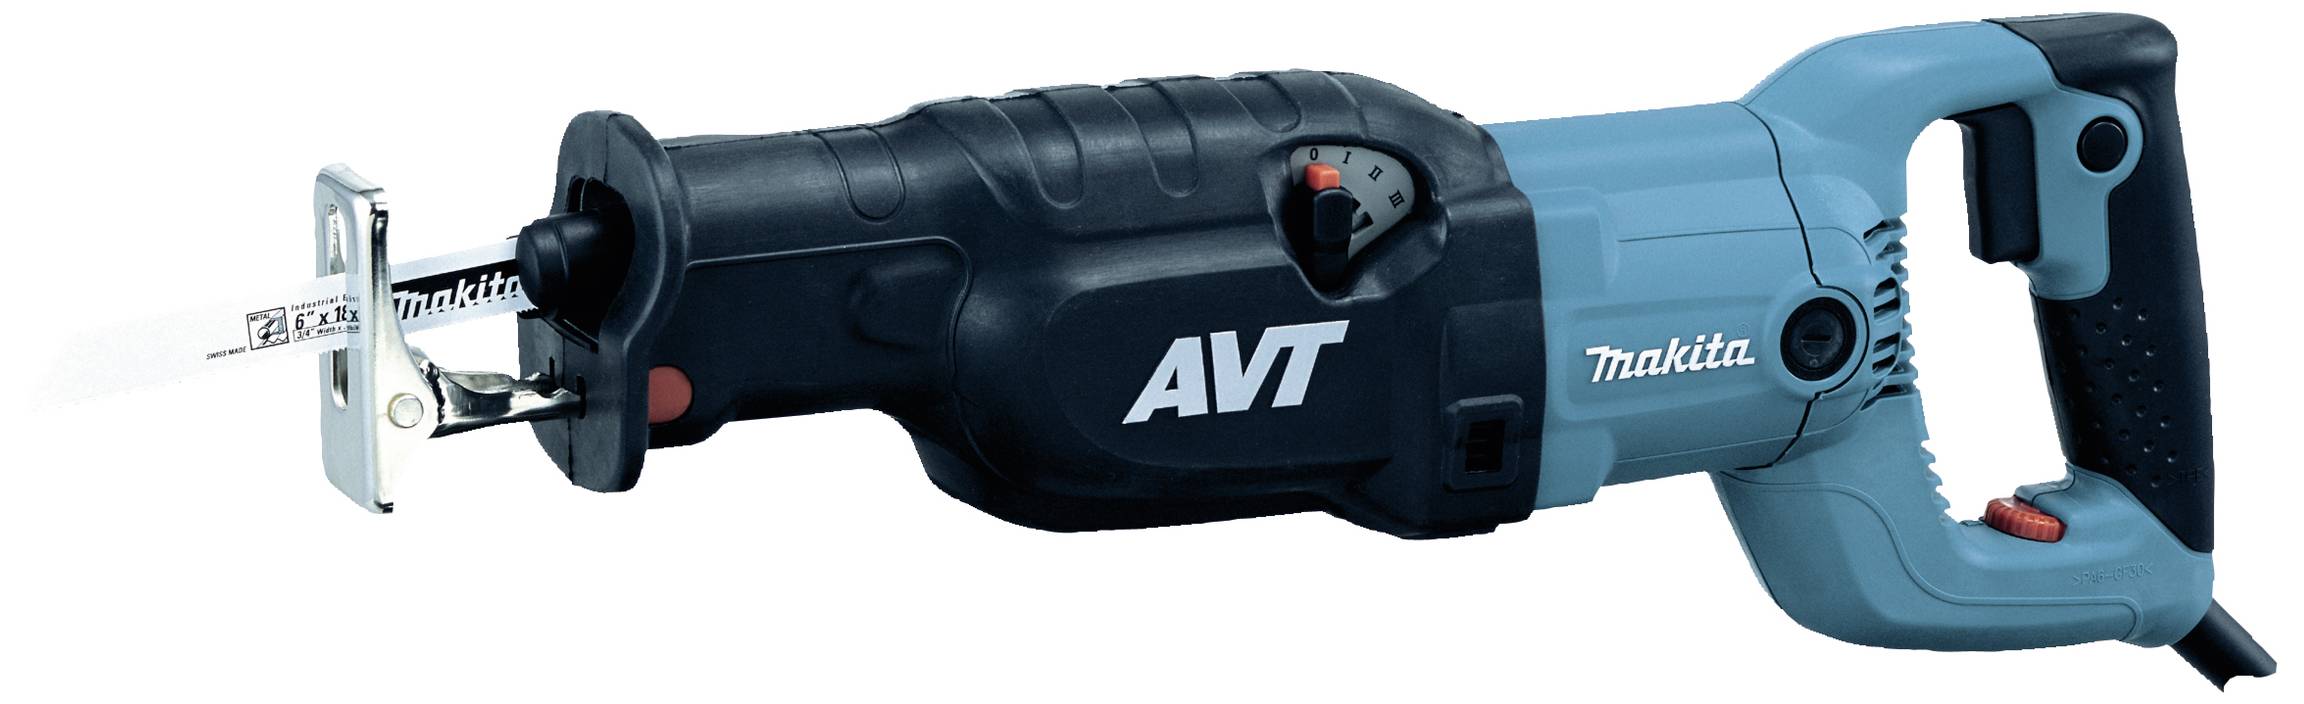 MAKITA Reciprosäge AVT Technologie (schwarz/blau) (JR3070CT)